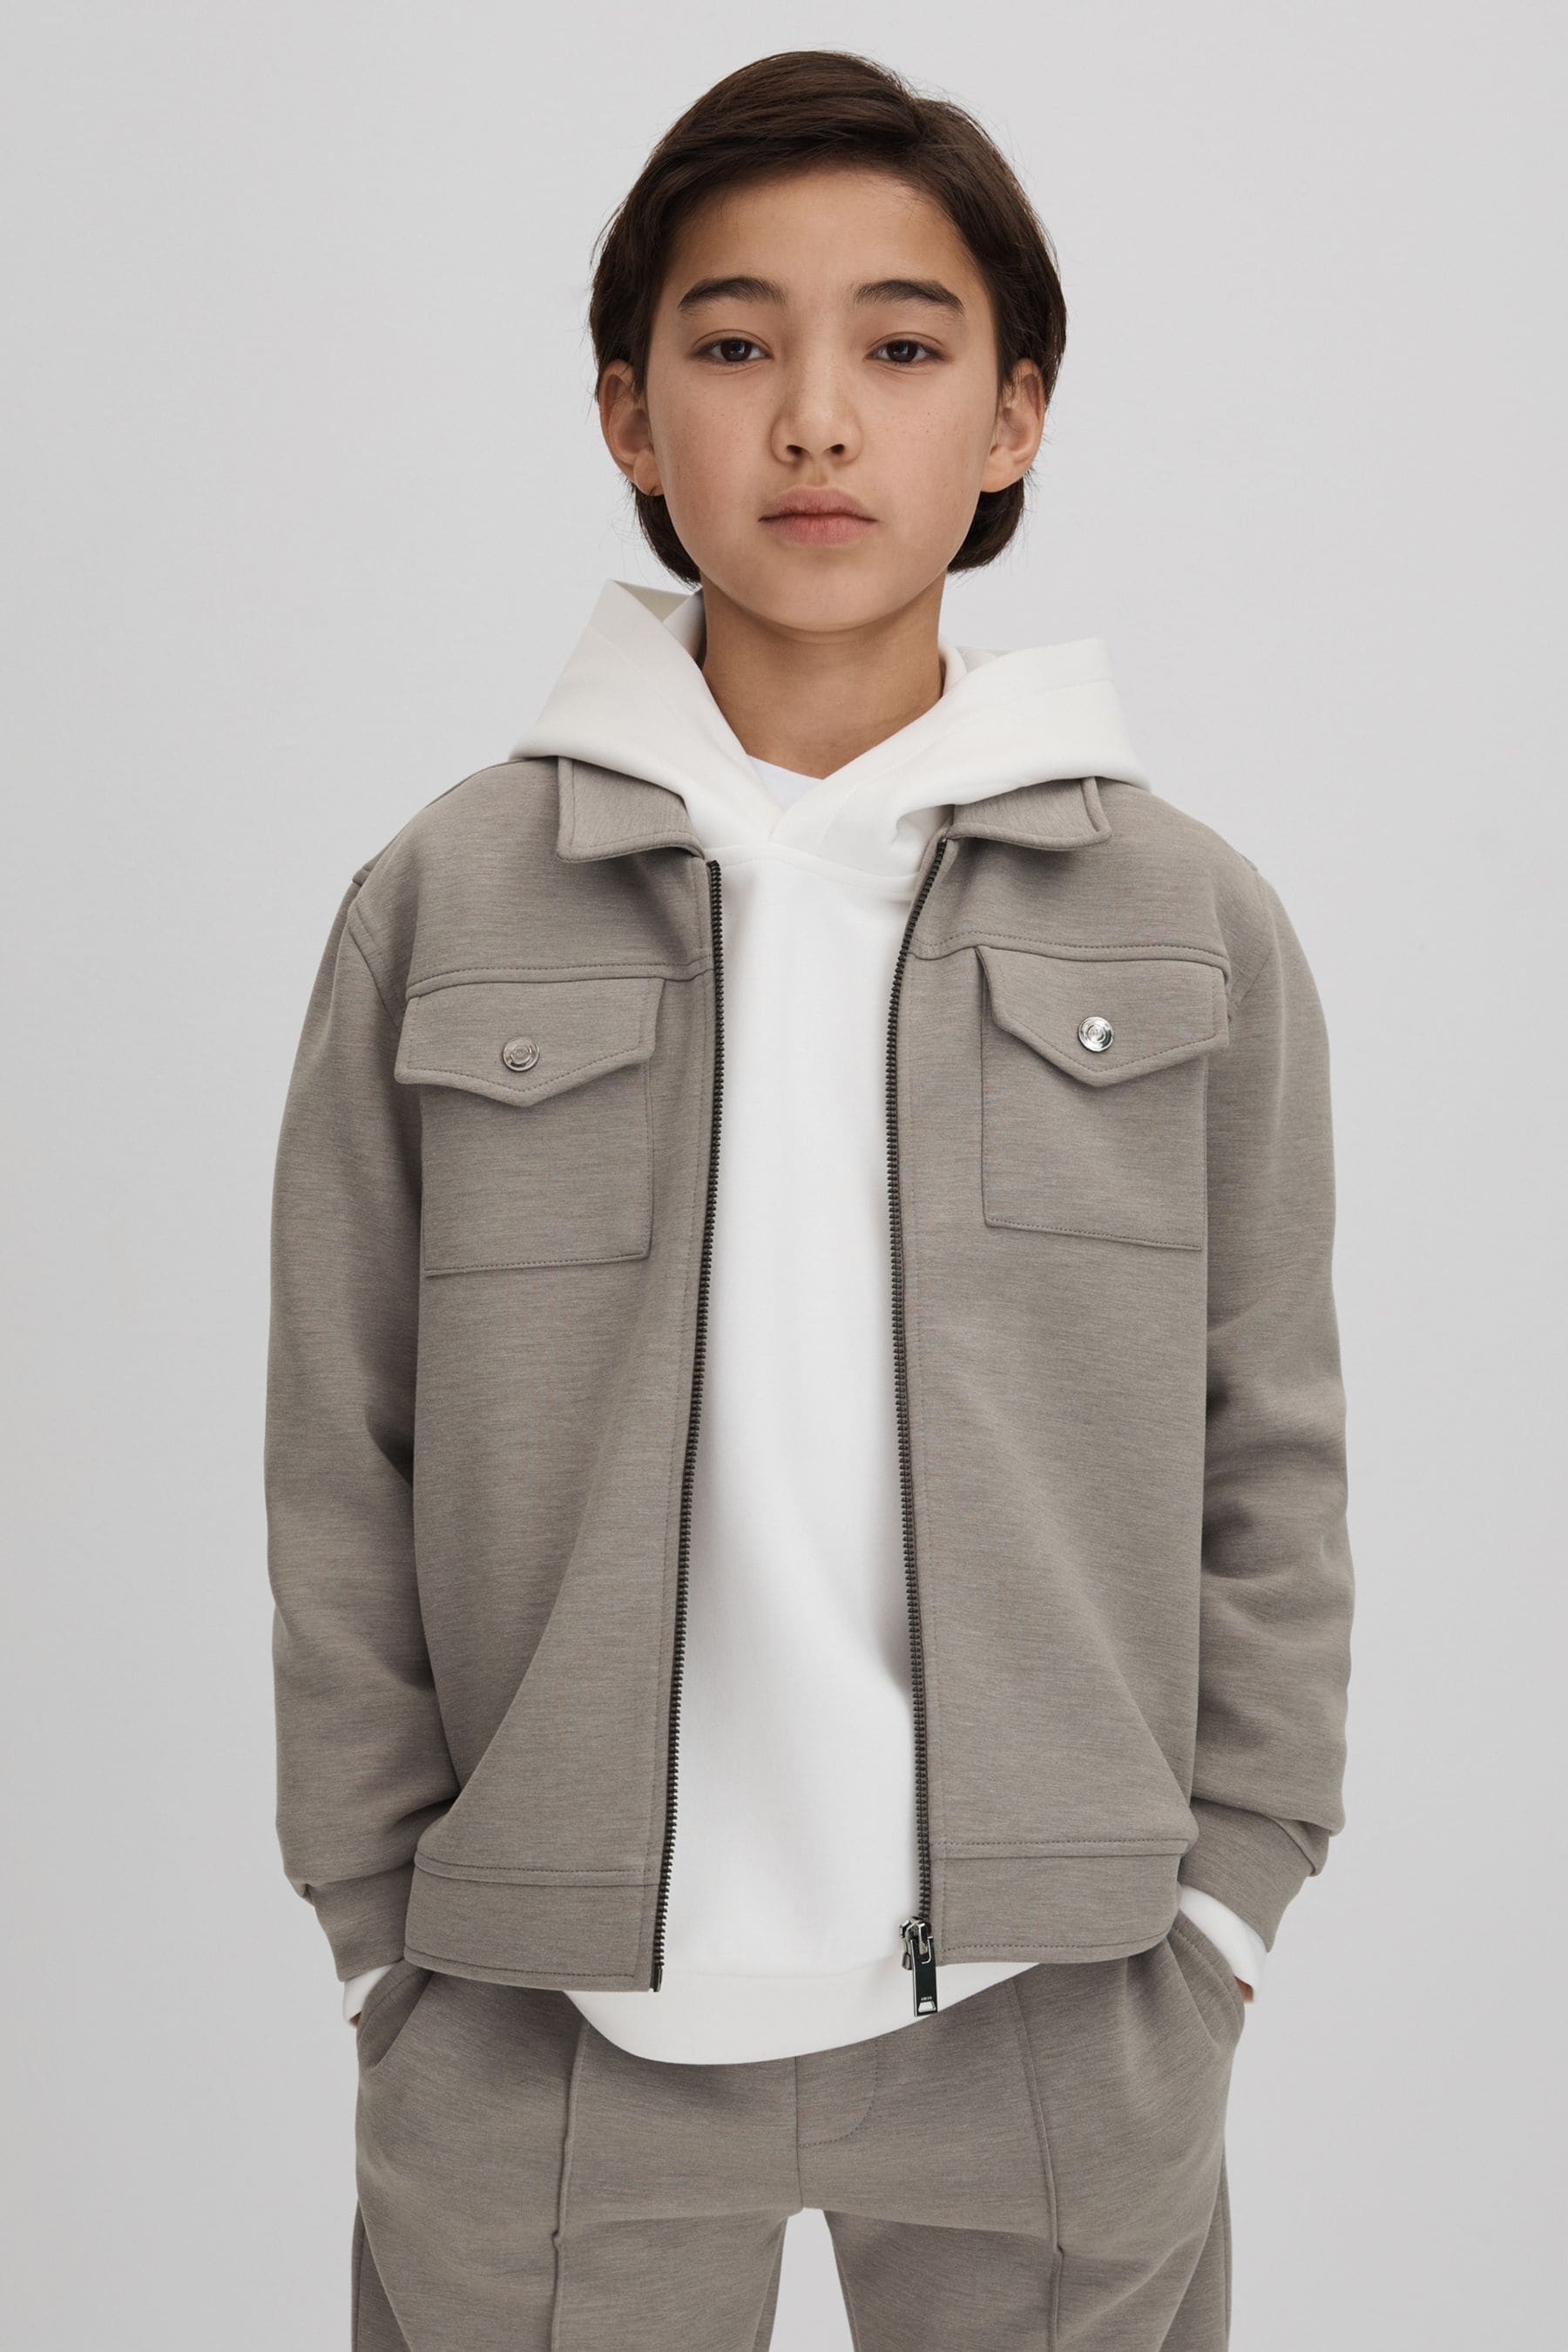 Reiss Kids' Medina - Taupe Junior Interlock Jersey Zip-through Jacket, Age 6-7 Years